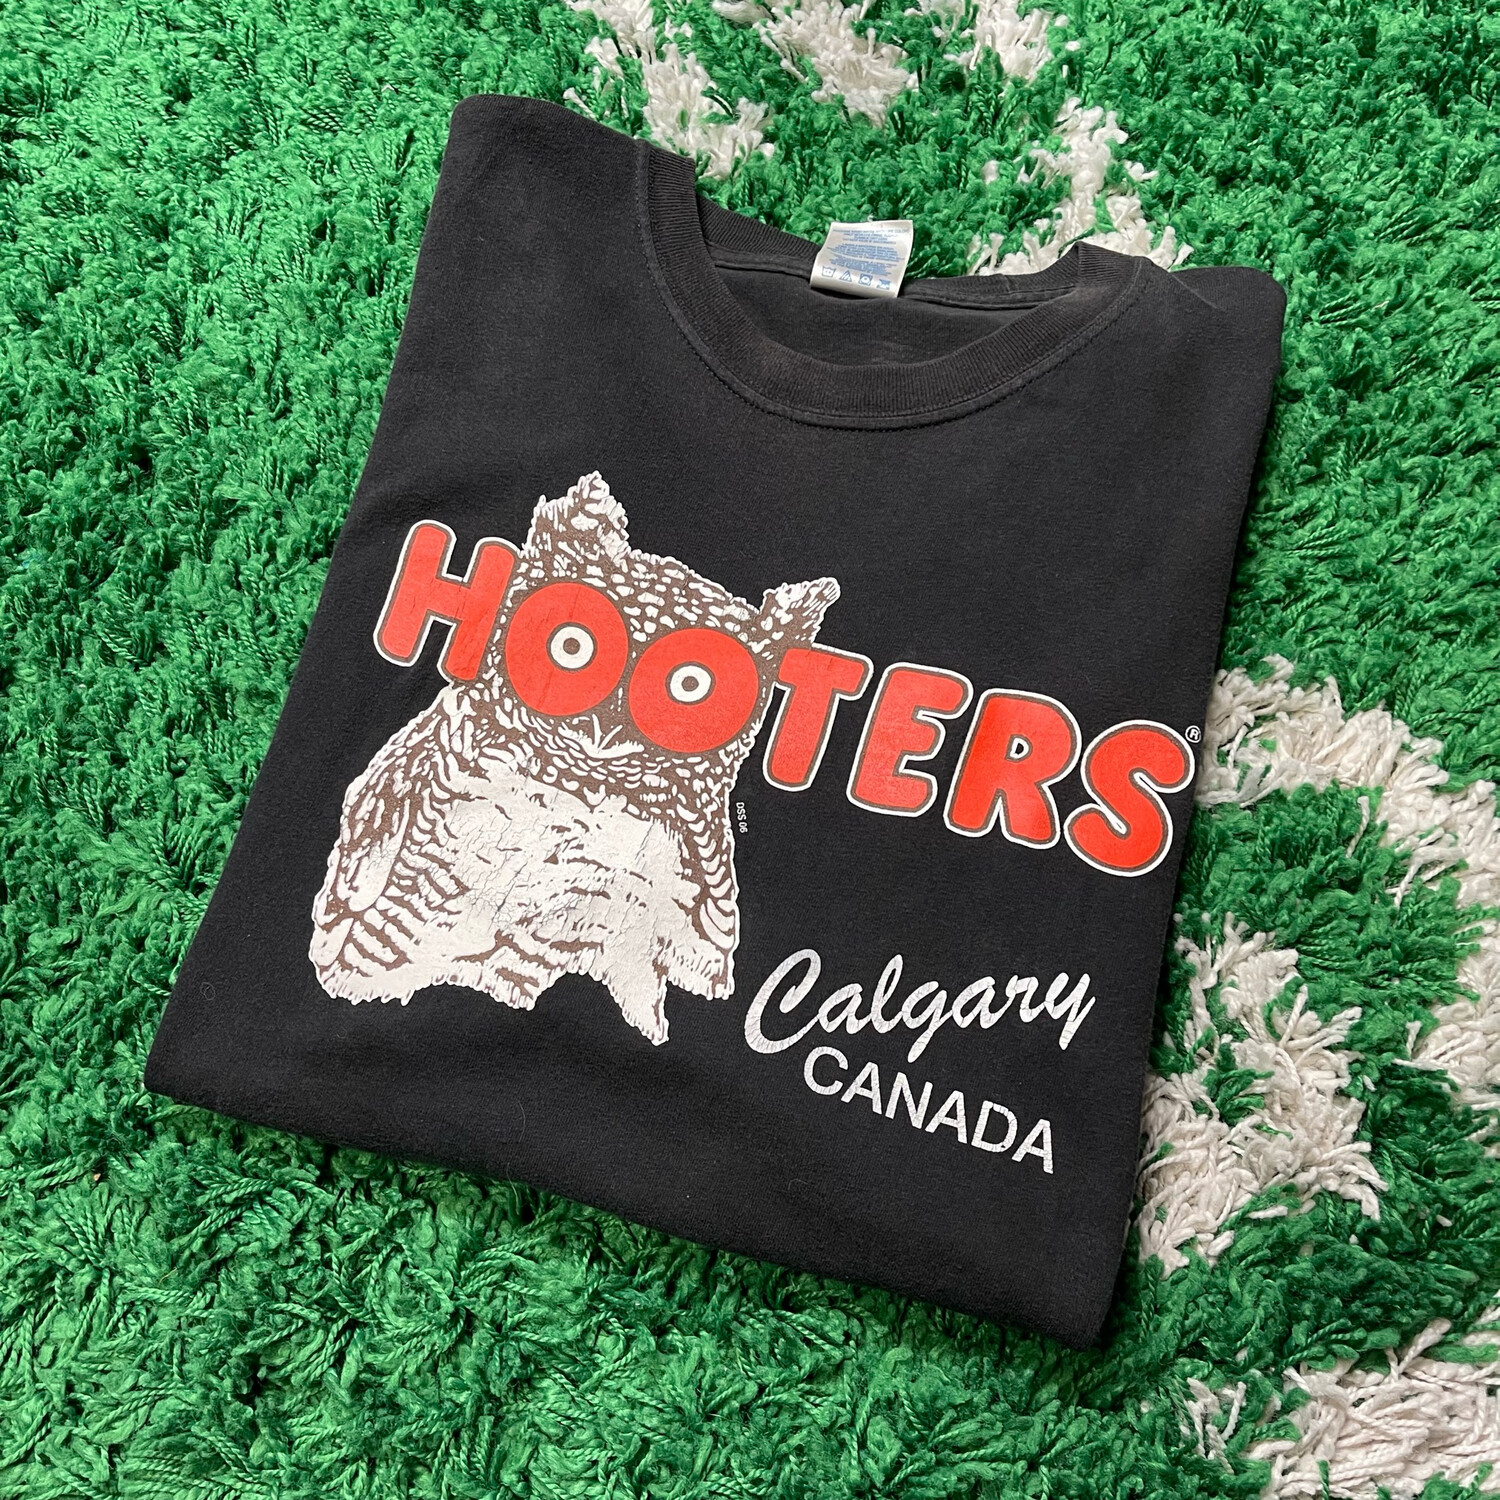 Hooters Calgary Tee Size XL